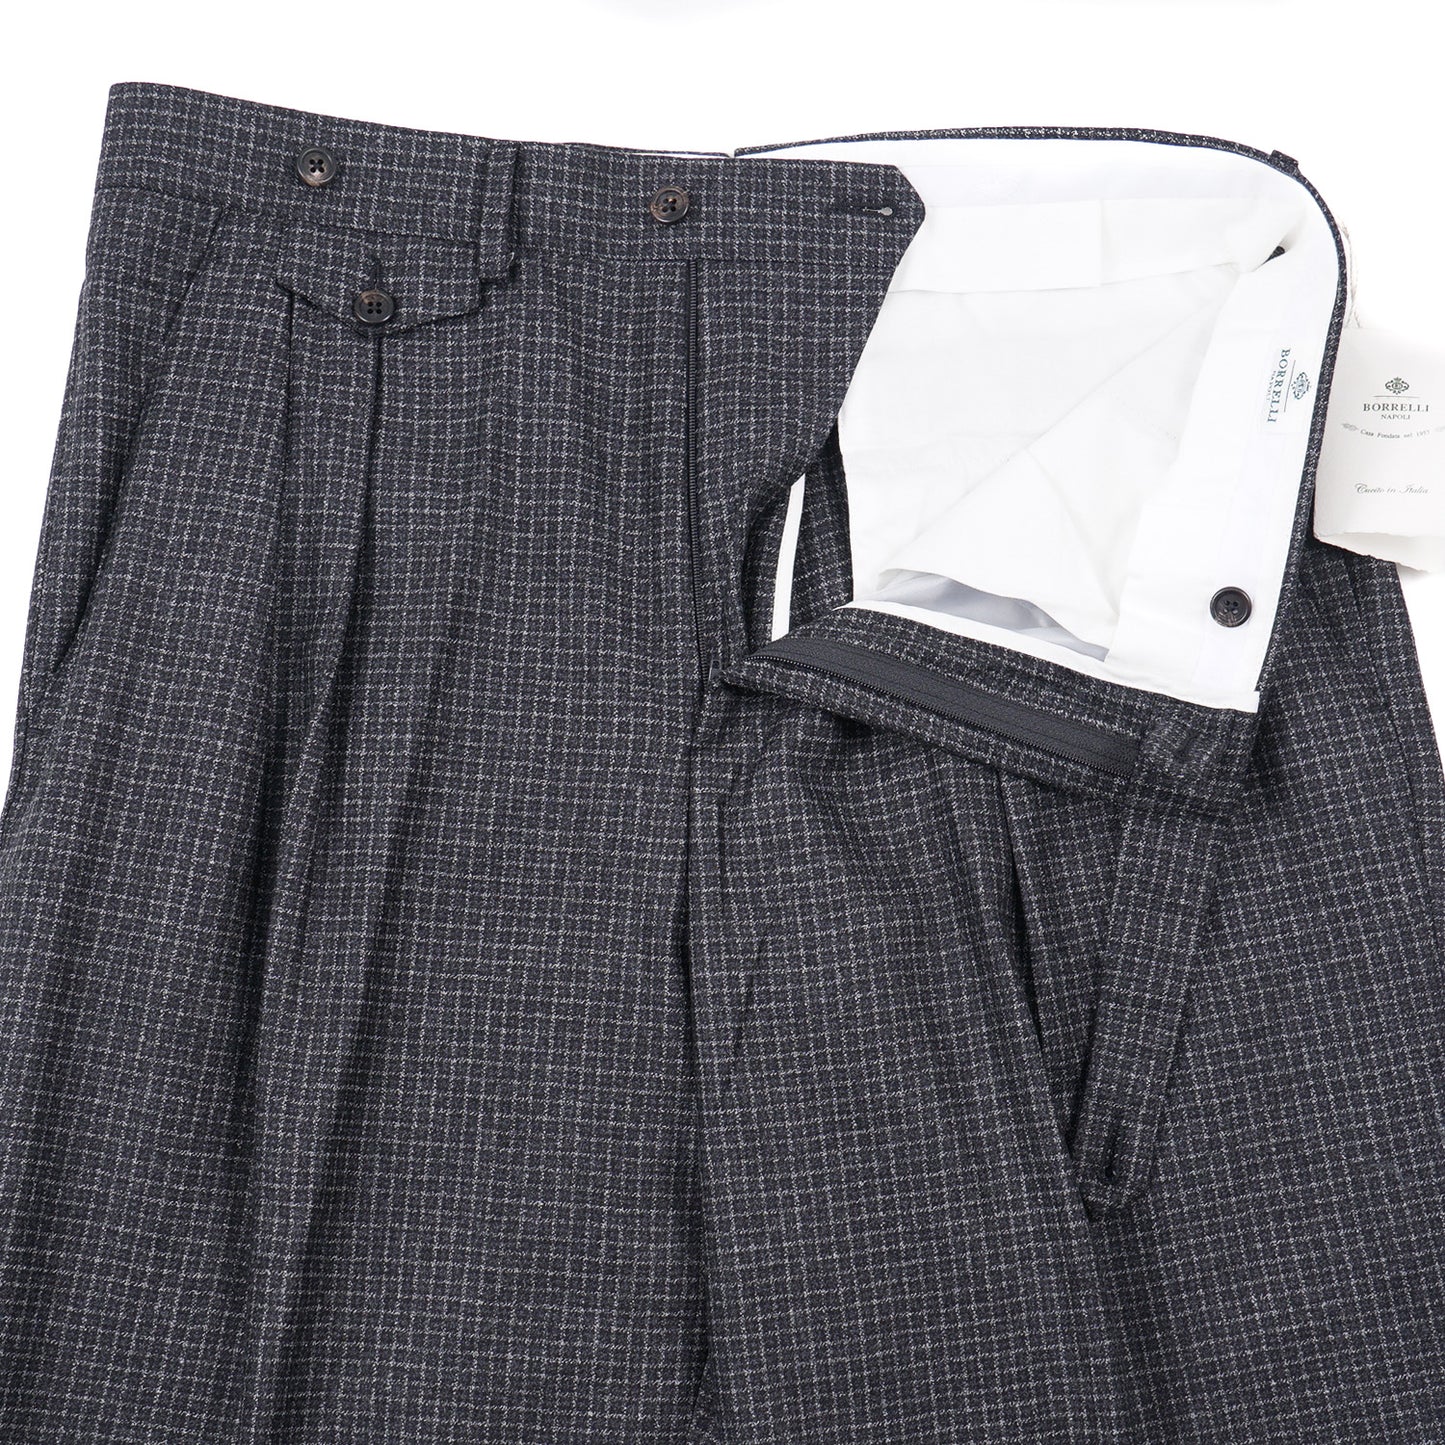 Luigi Borrelli Soft-Woven Wool Dress Pants - Top Shelf Apparel